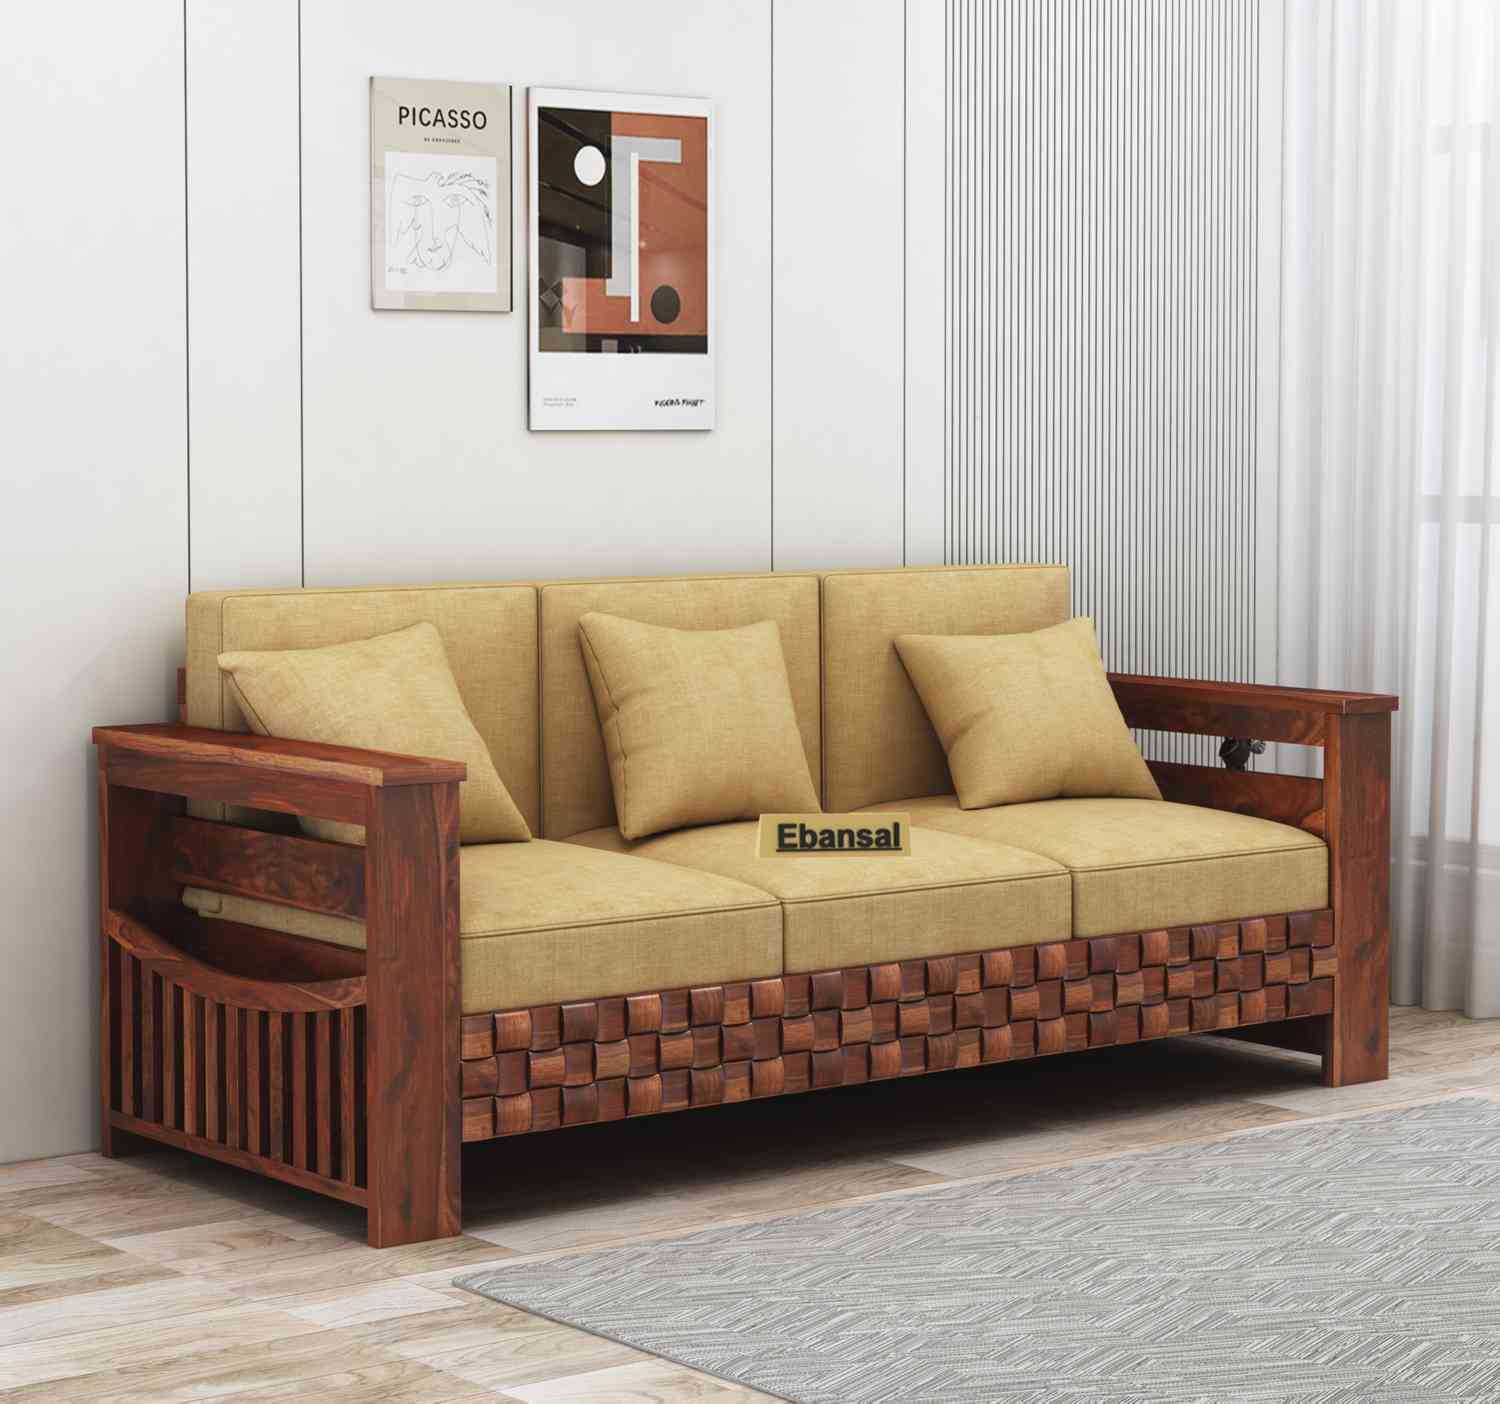 Olivia Solid Sheesham Wood 3 Seater Sofa (Natural Finish)